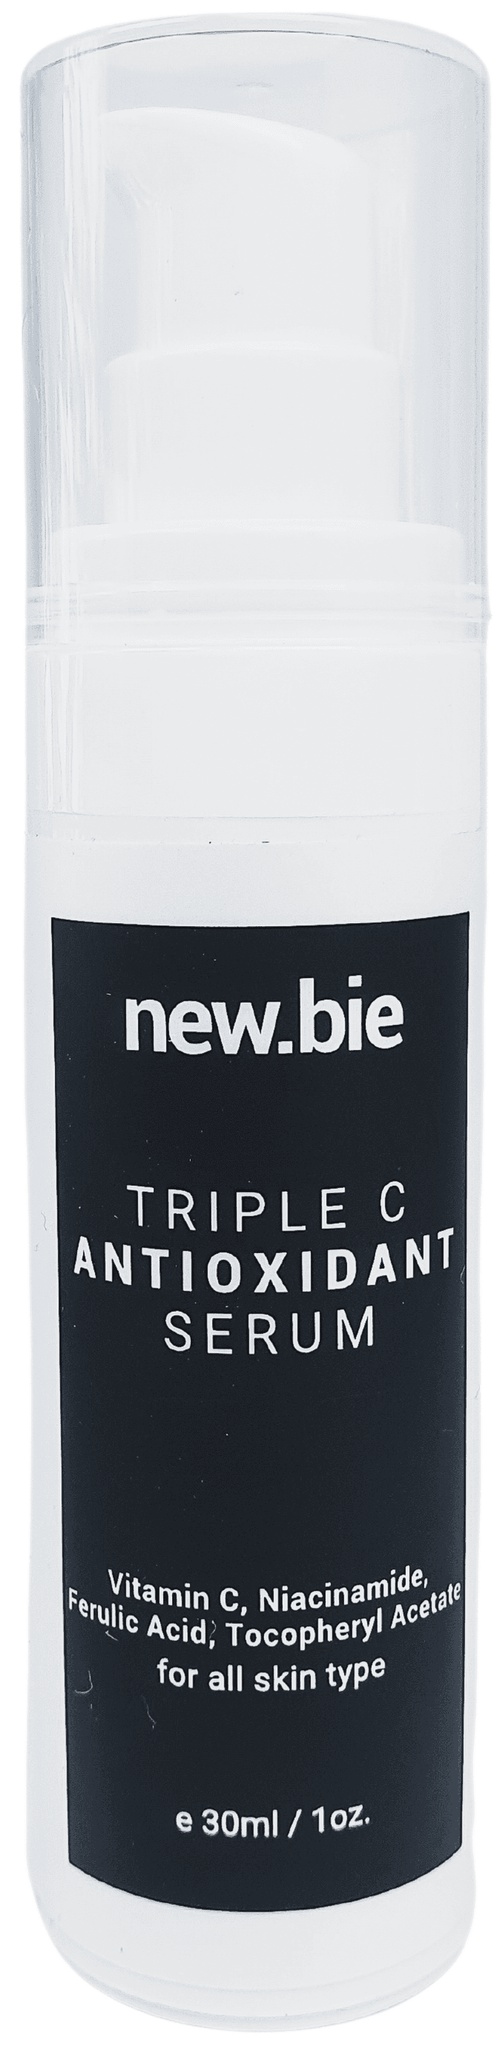 NEW.BIE Triple C Antioxidant Serum